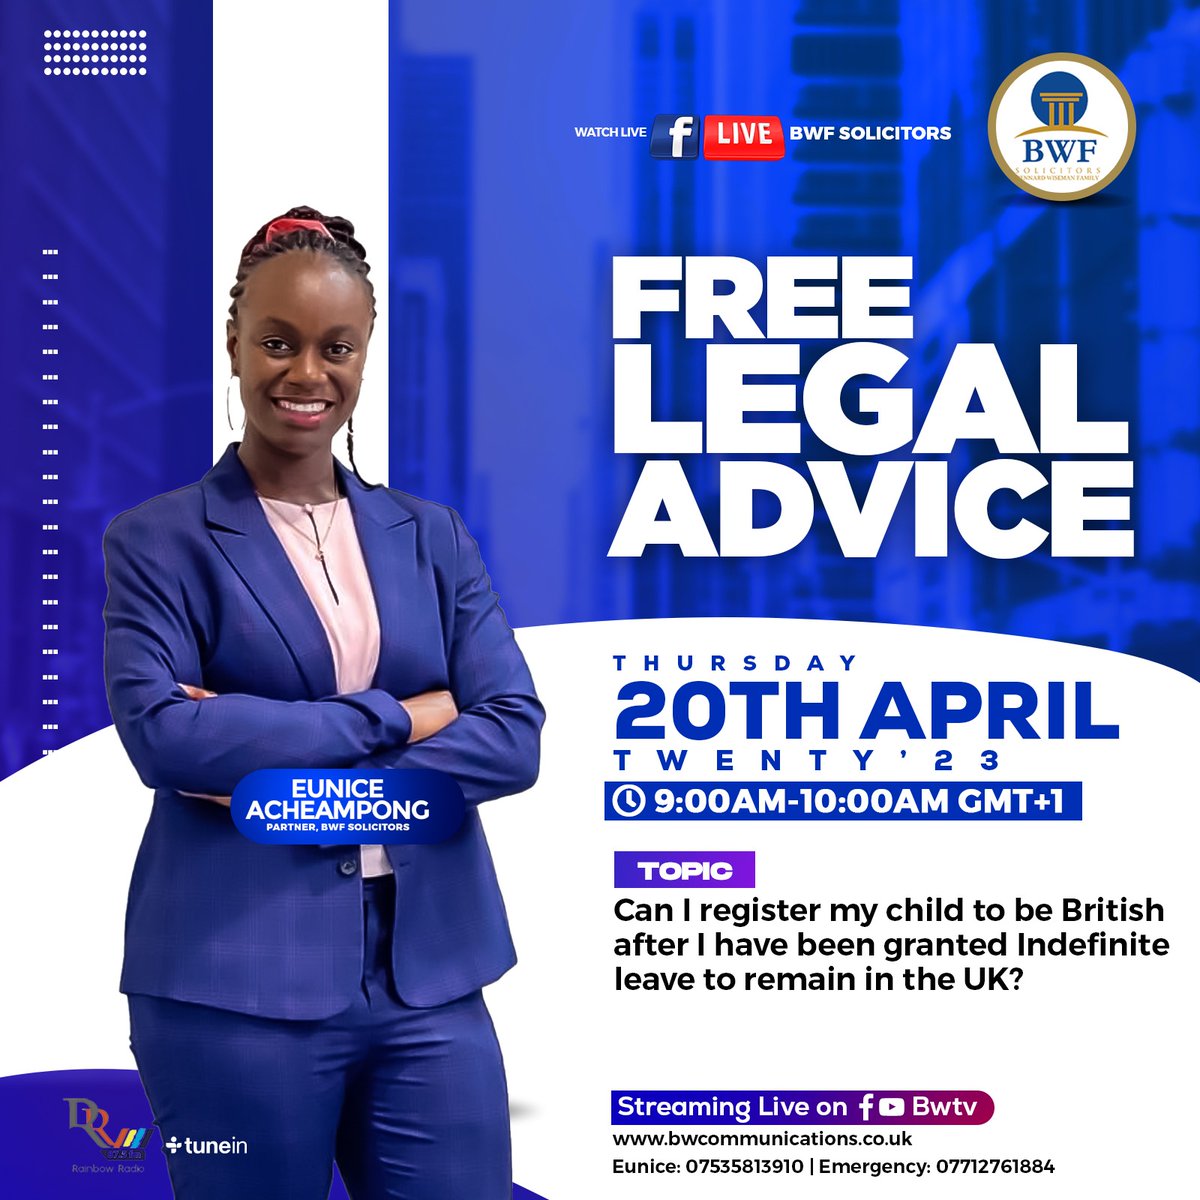 FREE LEGAL ADVICE with Prophet Osebre-Osei 
GUEST: Eunice Acheampong
𝘾𝙖𝙣 𝙄 𝙧𝙚𝙜𝙞𝙨𝙩𝙚𝙧 𝙢𝙮 𝙘𝙝𝙞𝙡𝙙 𝙩𝙤 𝙗𝙚 𝘽𝙧𝙞𝙩𝙞𝙨𝙝 𝙖𝙛𝙩𝙚𝙧 𝙄 𝙝𝙖𝙫𝙚 𝙗𝙚𝙚𝙣 𝙜𝙧𝙖𝙣𝙩𝙚𝙙 𝙄𝙣𝙙𝙚𝙛𝙞𝙣𝙞𝙩𝙚 𝙡𝙚𝙖𝙫𝙚 𝙩𝙤 𝙧𝙚𝙢𝙖𝙞𝙣 𝙞𝙣 𝙩𝙝𝙚 𝙐𝙆? #ghanauk #ukghana #uklaws